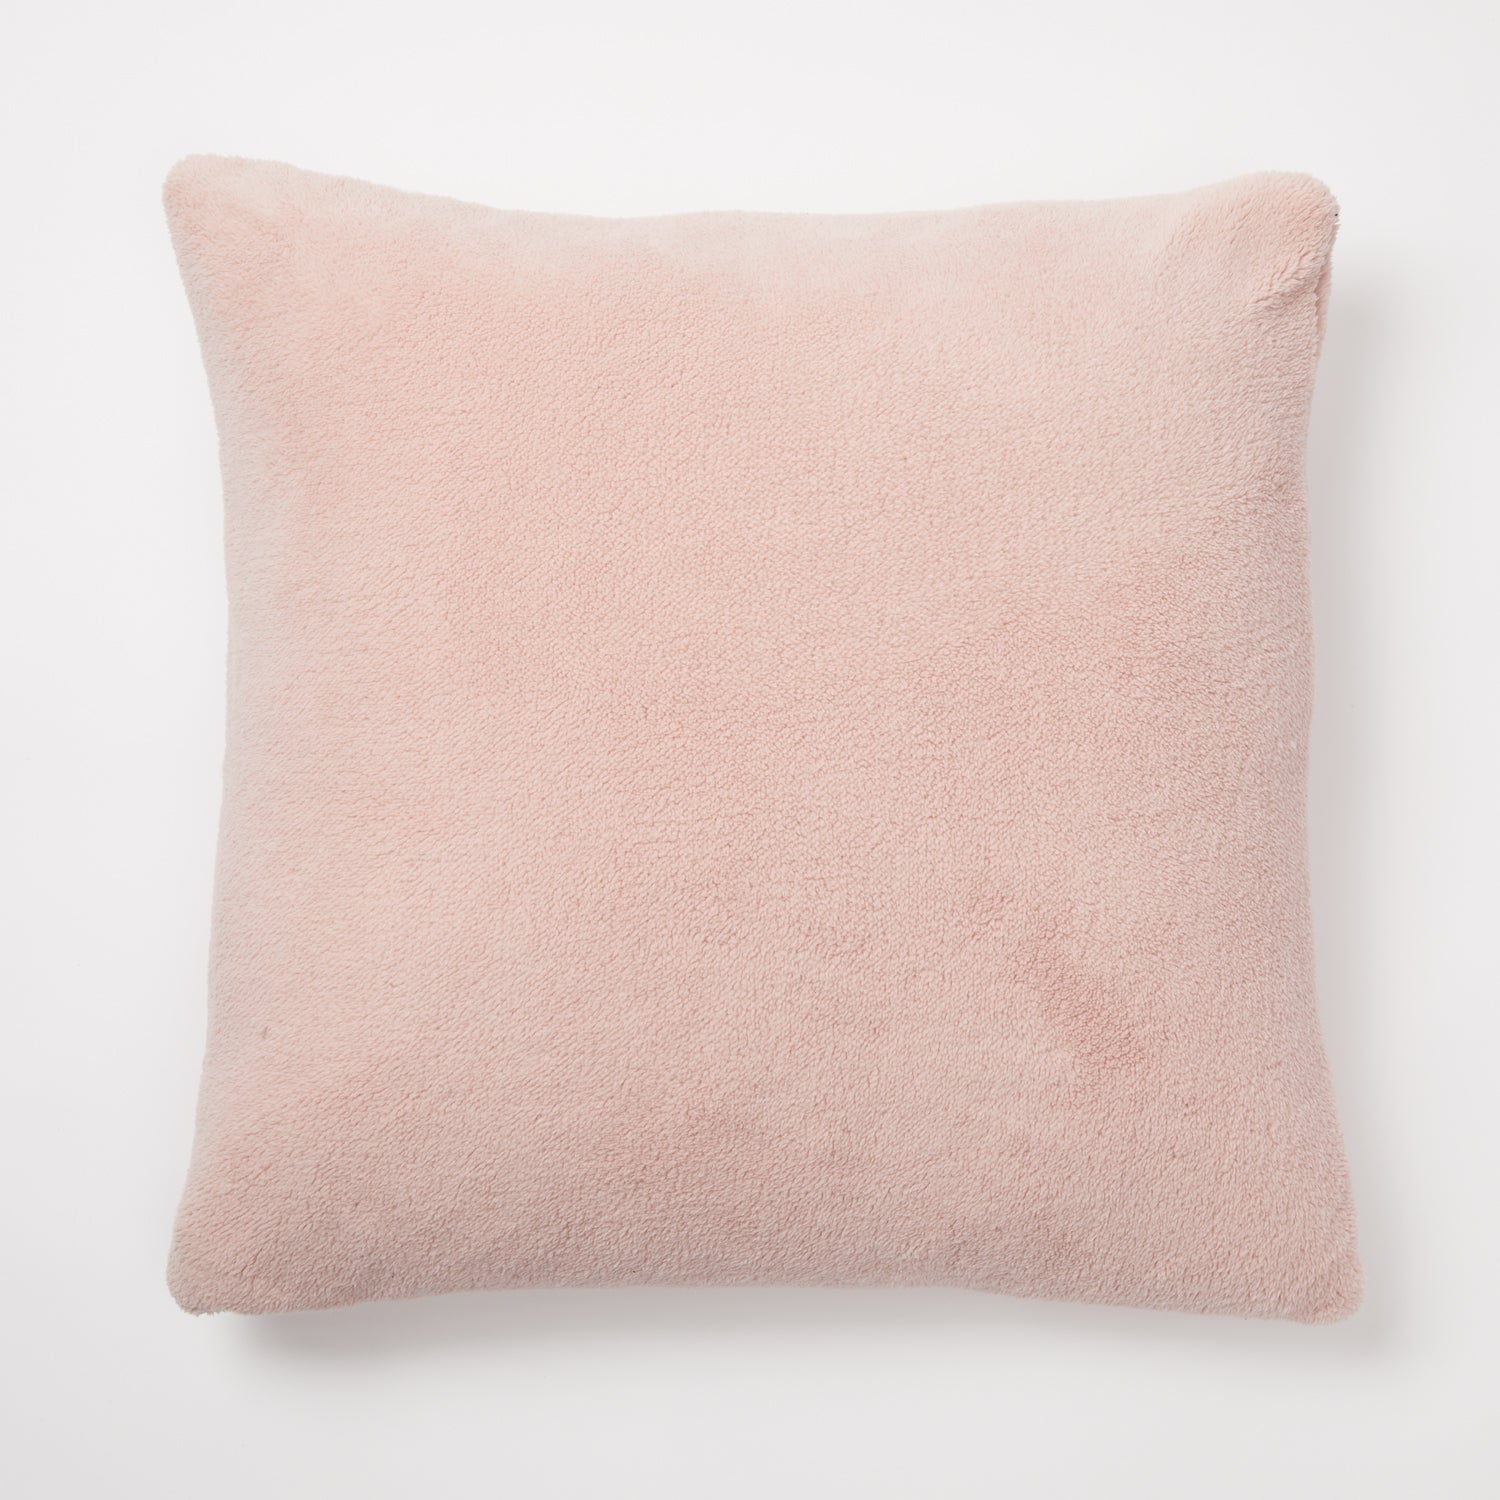 Sherpa Euro Pillow - Dusty Rose | Bedding